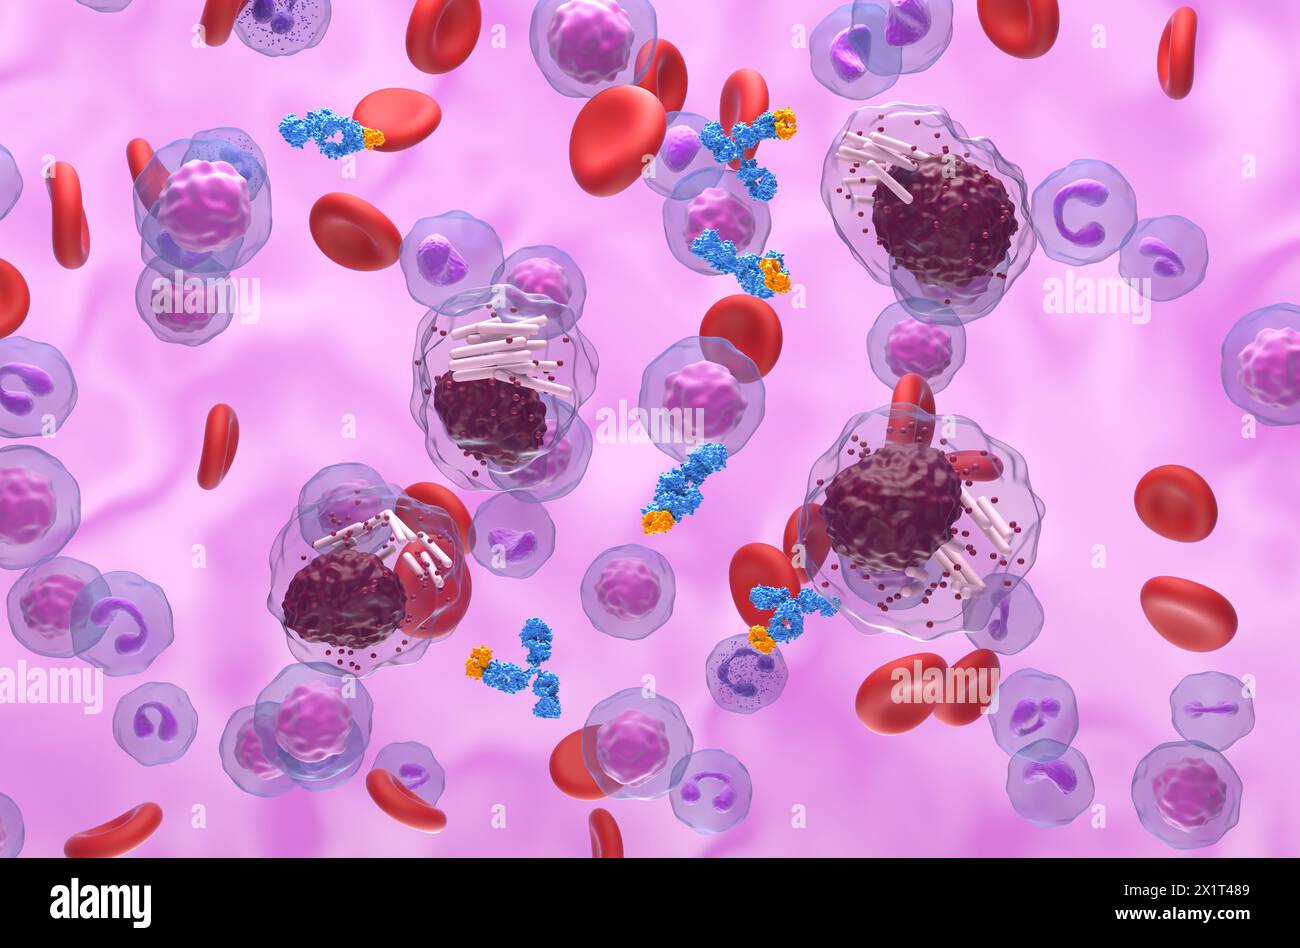 Monoklonale Antikörperbehandlung bei chronischer lymphatischer Leukämie (CLL) - isometrische Darstellung 3D-Illustration Stockfoto